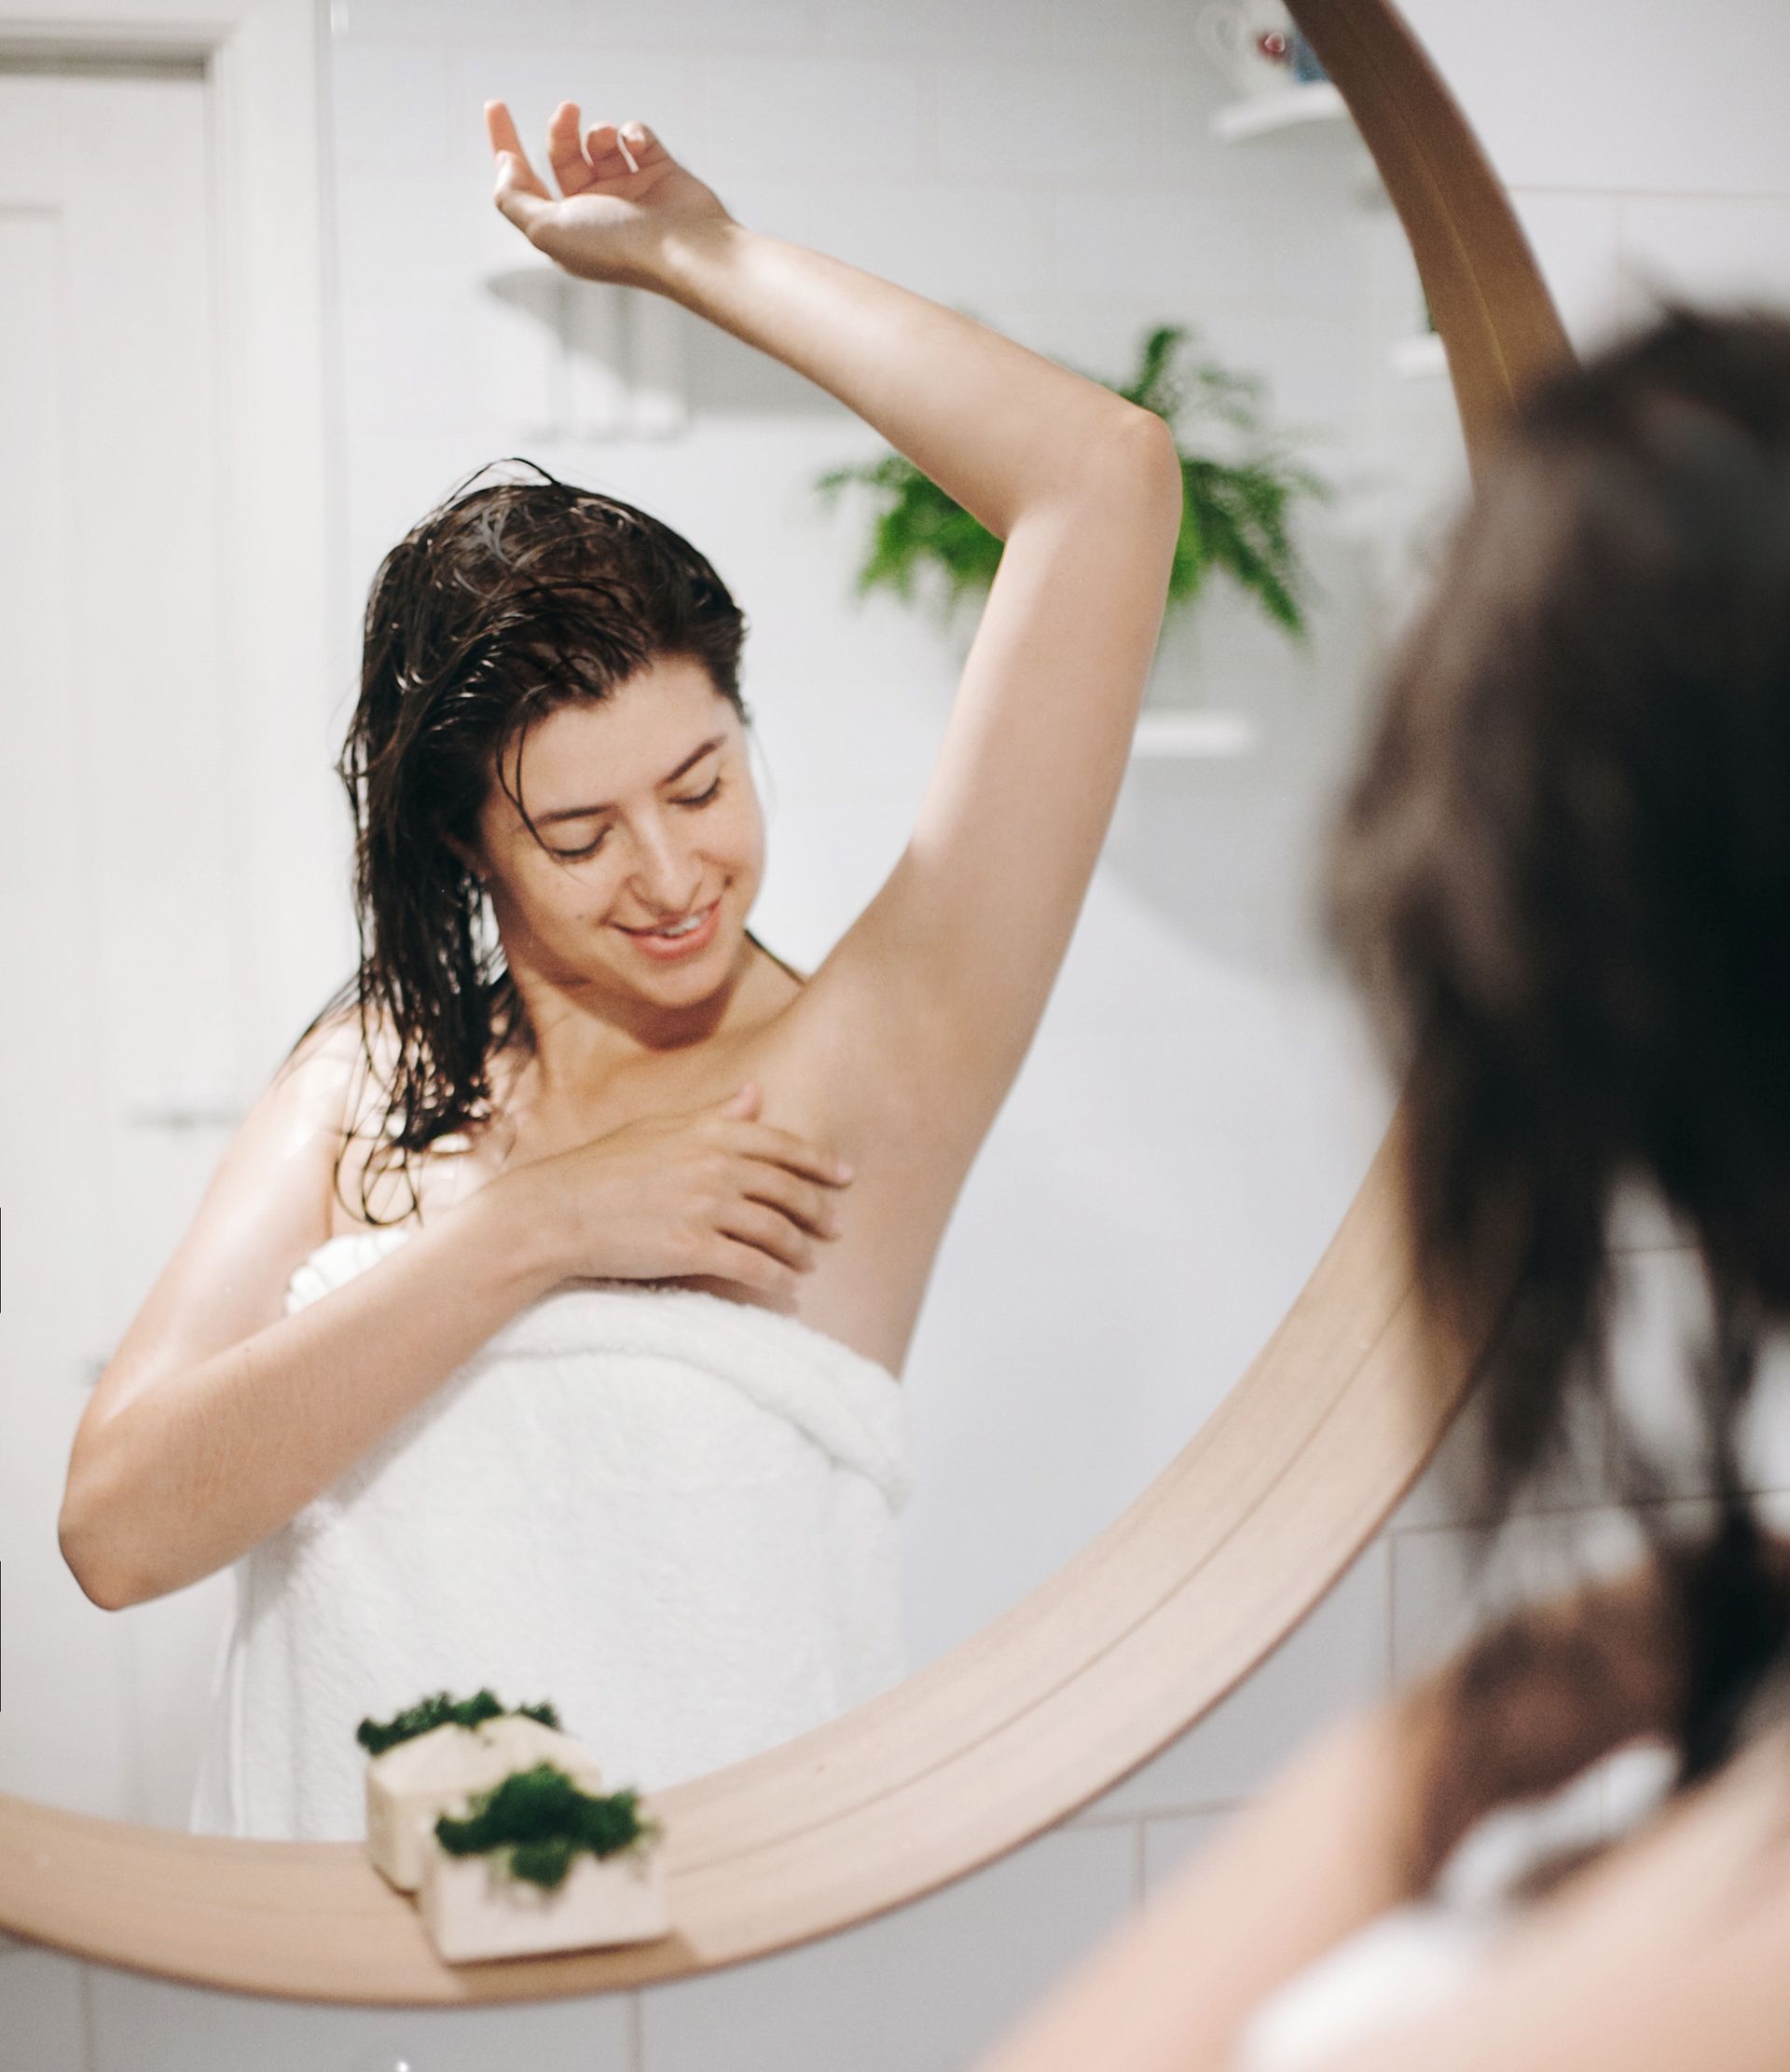 woman looking at underarms in mirror